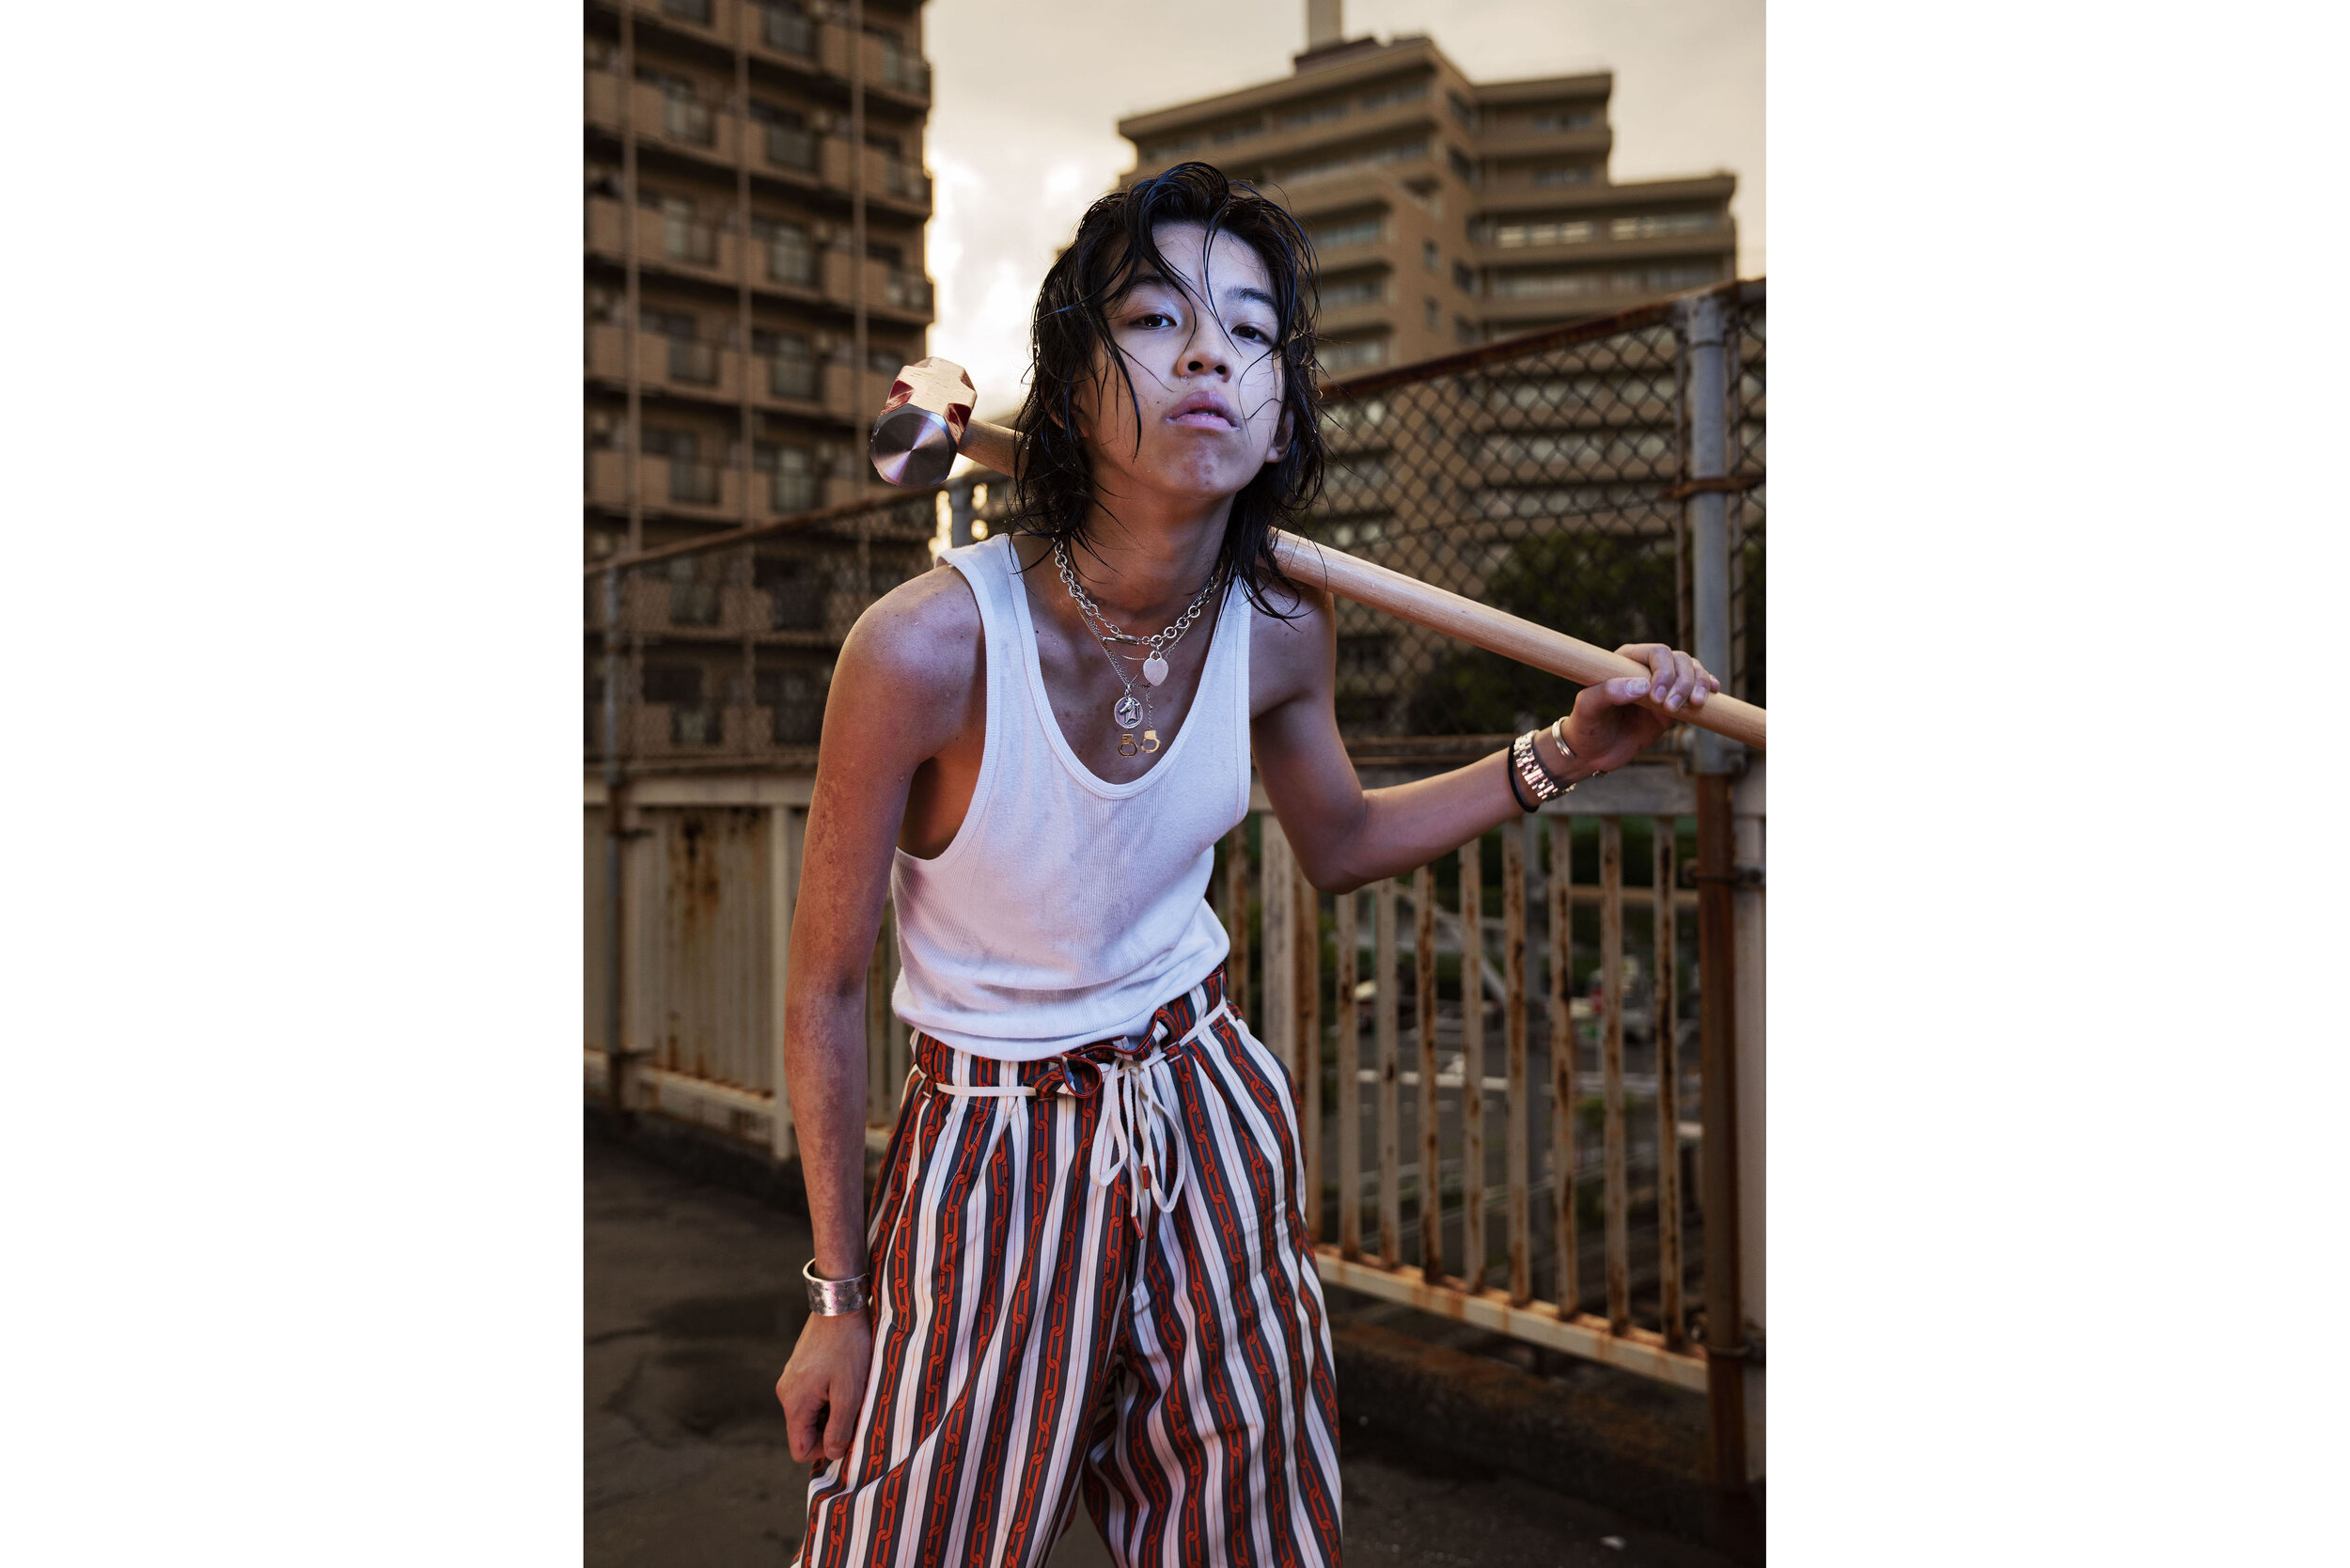 Andrew-Goldie-Photographer-Portraiture-Editorial-Japan-868.jpg